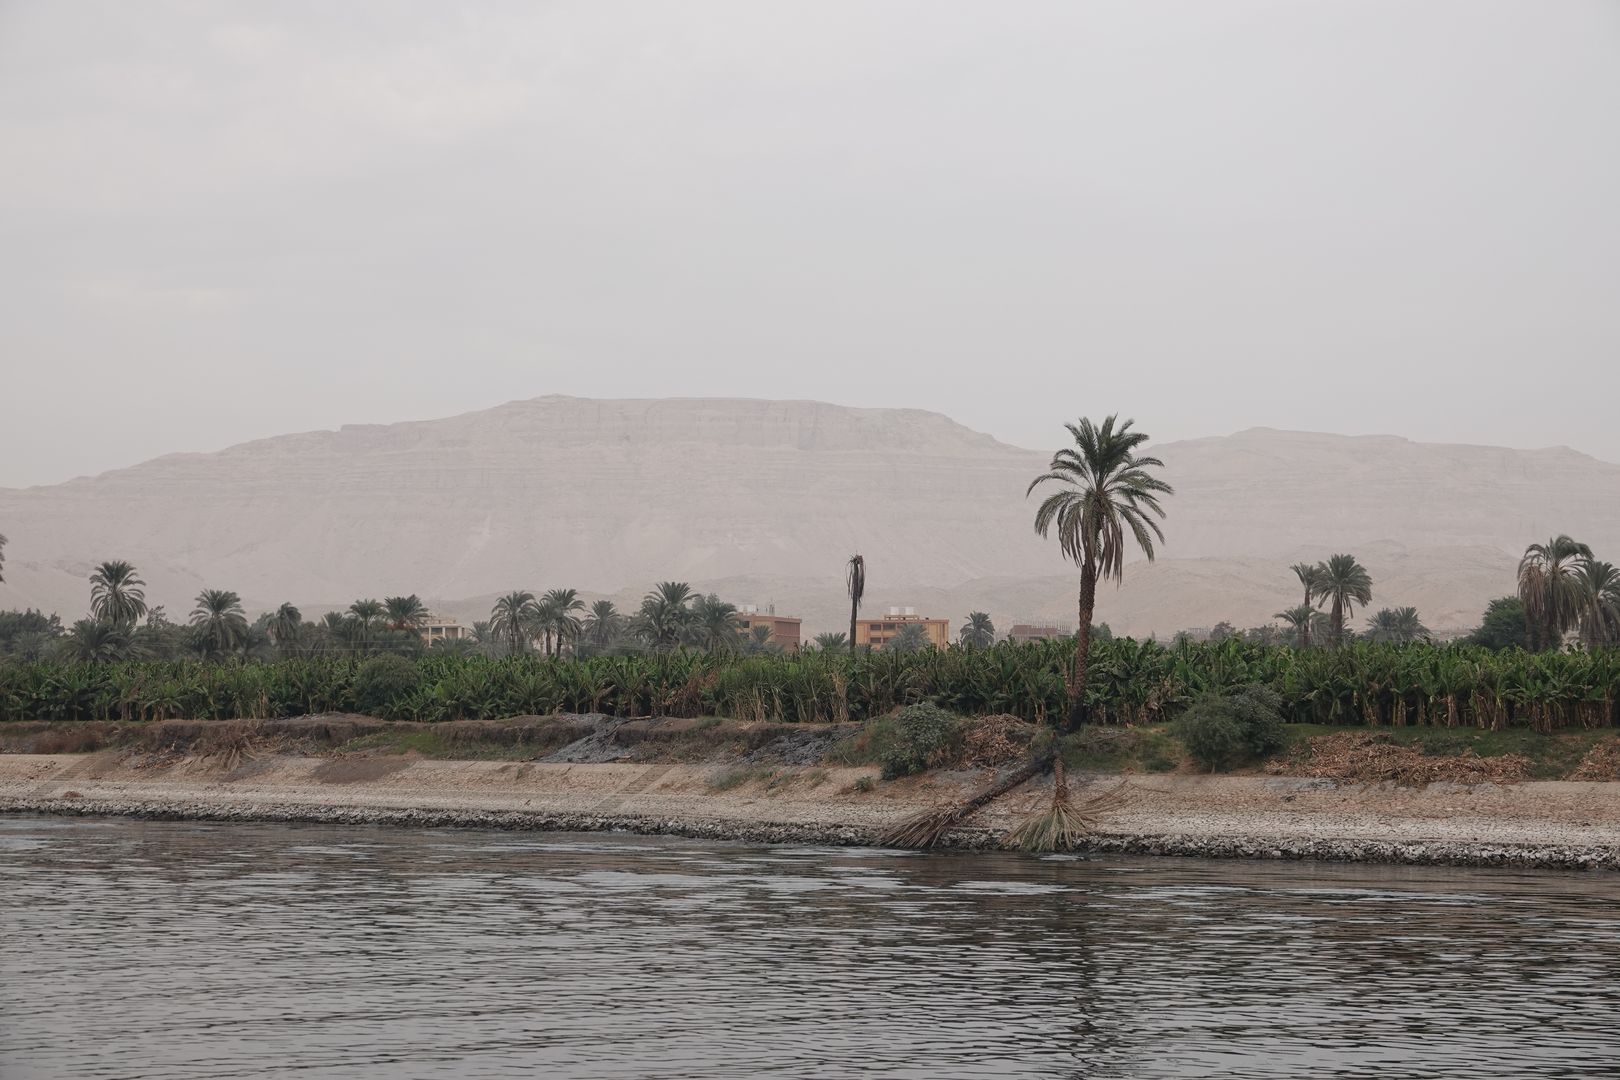 Nil - plavba z Kóm Ombo do Luxoru-0012